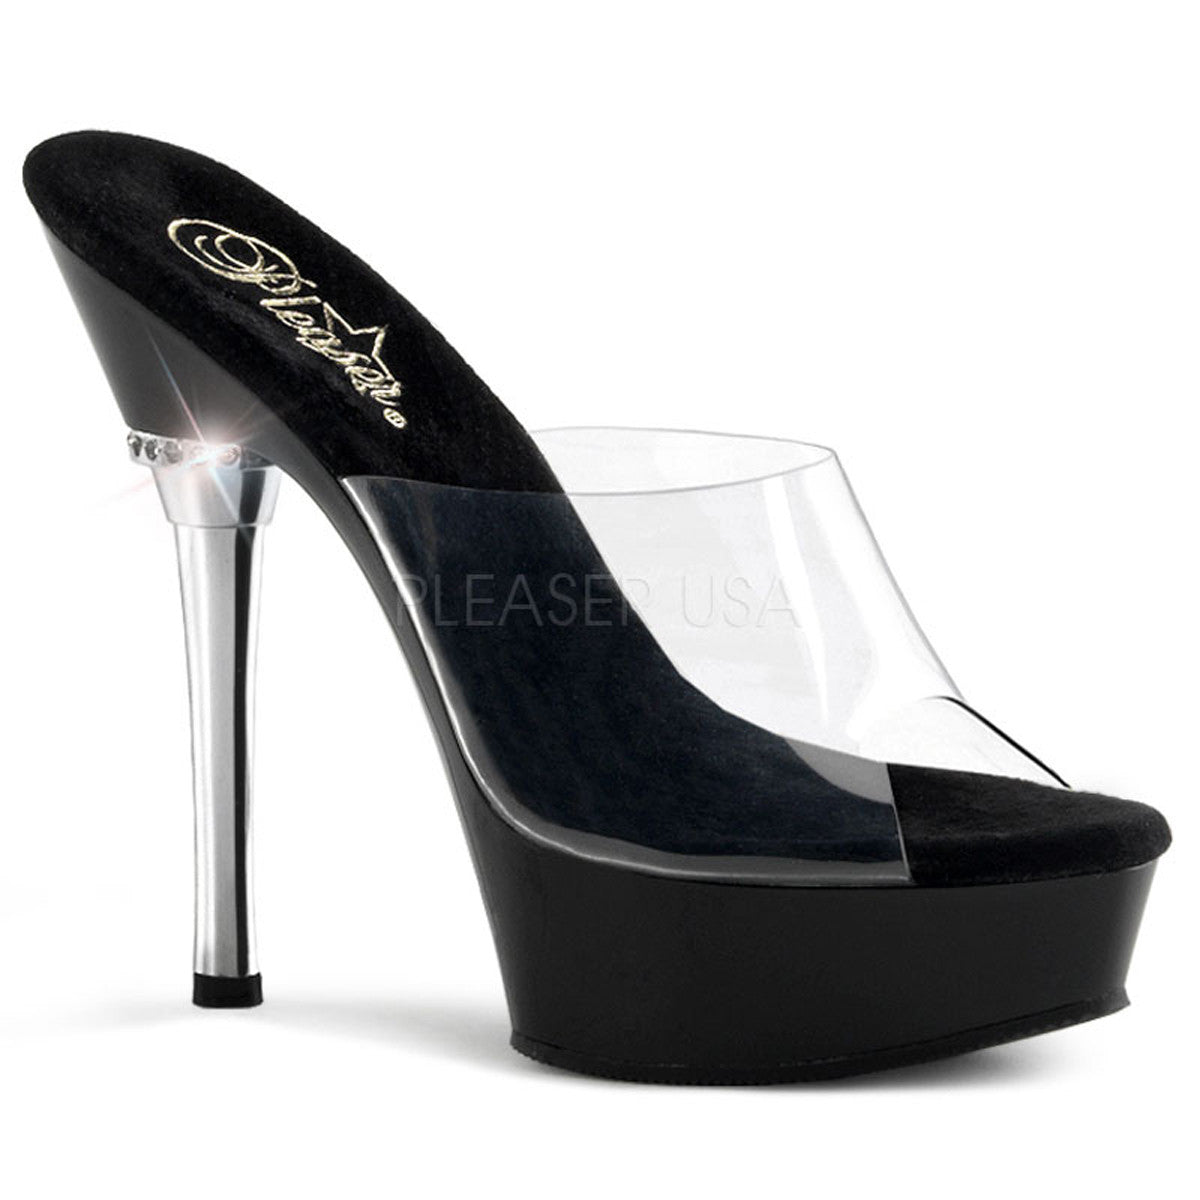 PLEASER ALLURE-601 Clear-Black Stiletto Sandals - Shoecup.com - 1